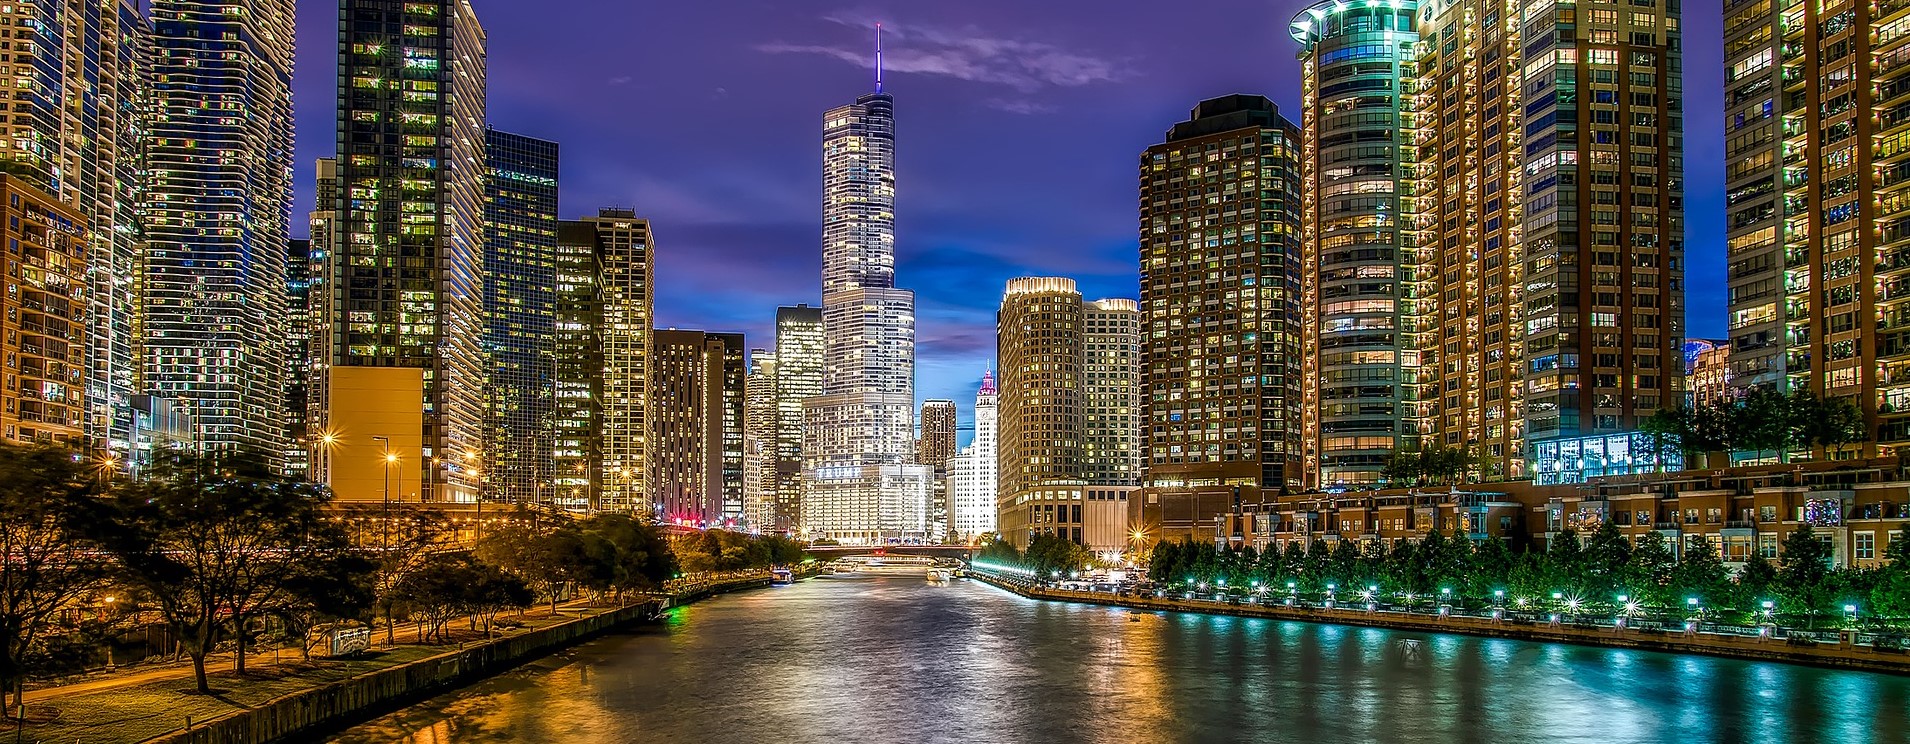 Chicago, Illinois Skyline | Kids Car Donations